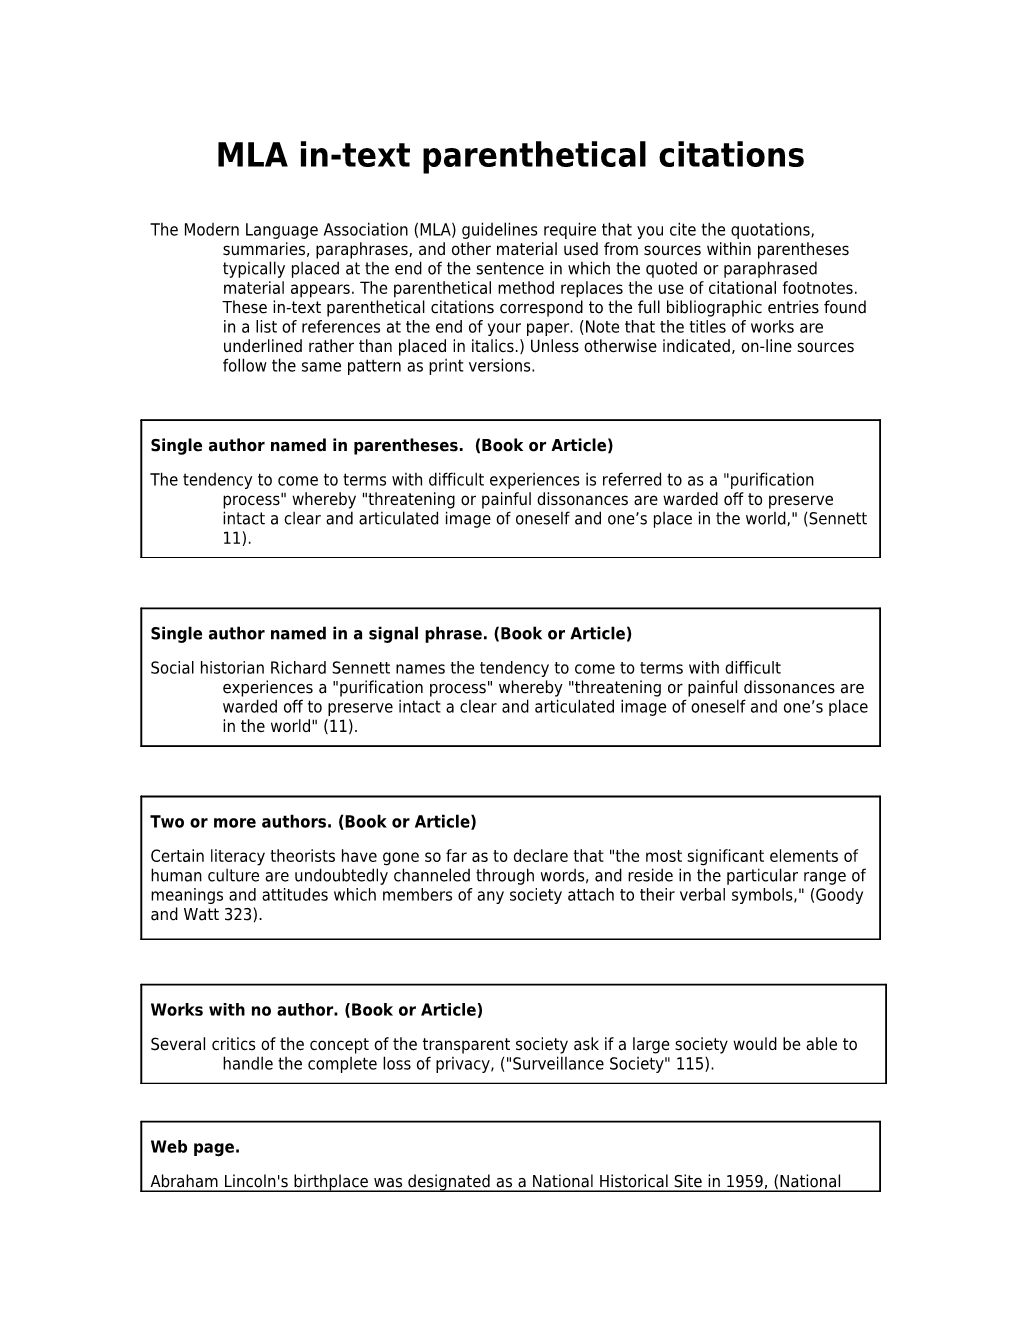 MLA In-Text Parenthetical Citations s1